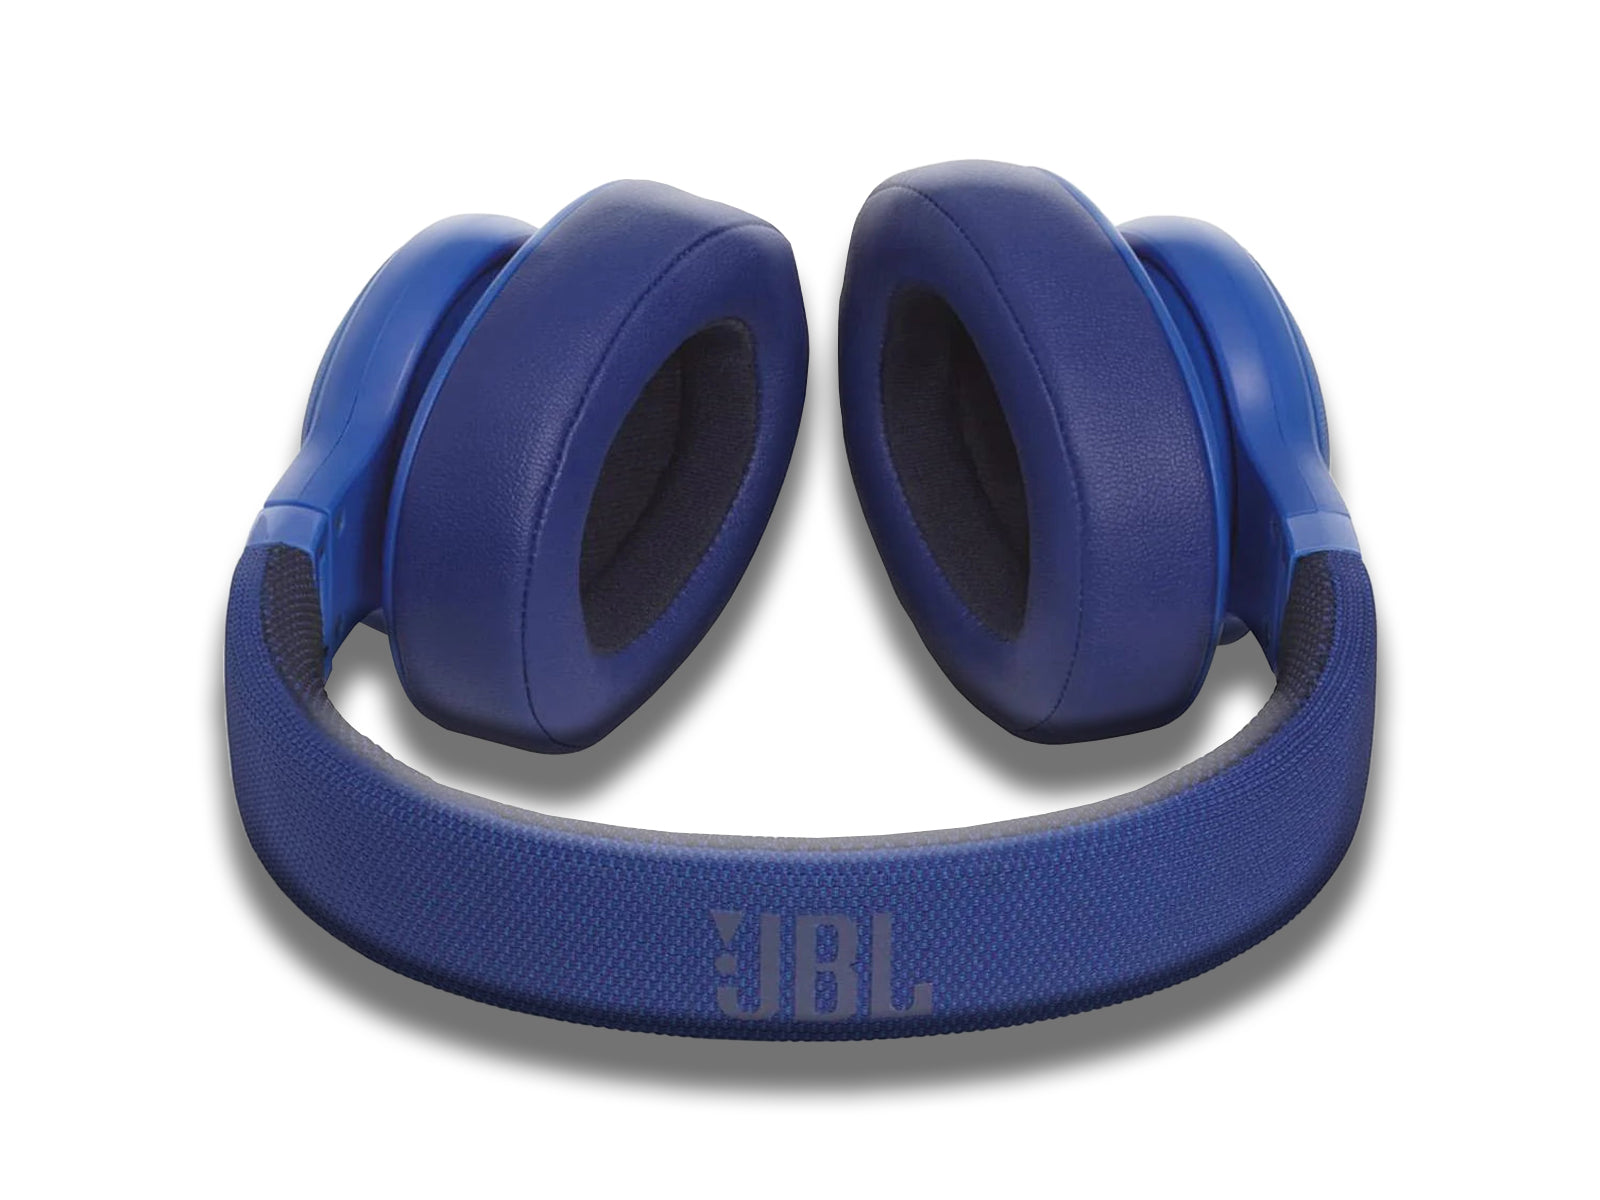 JBL E55BT Blue Headphones Headband View